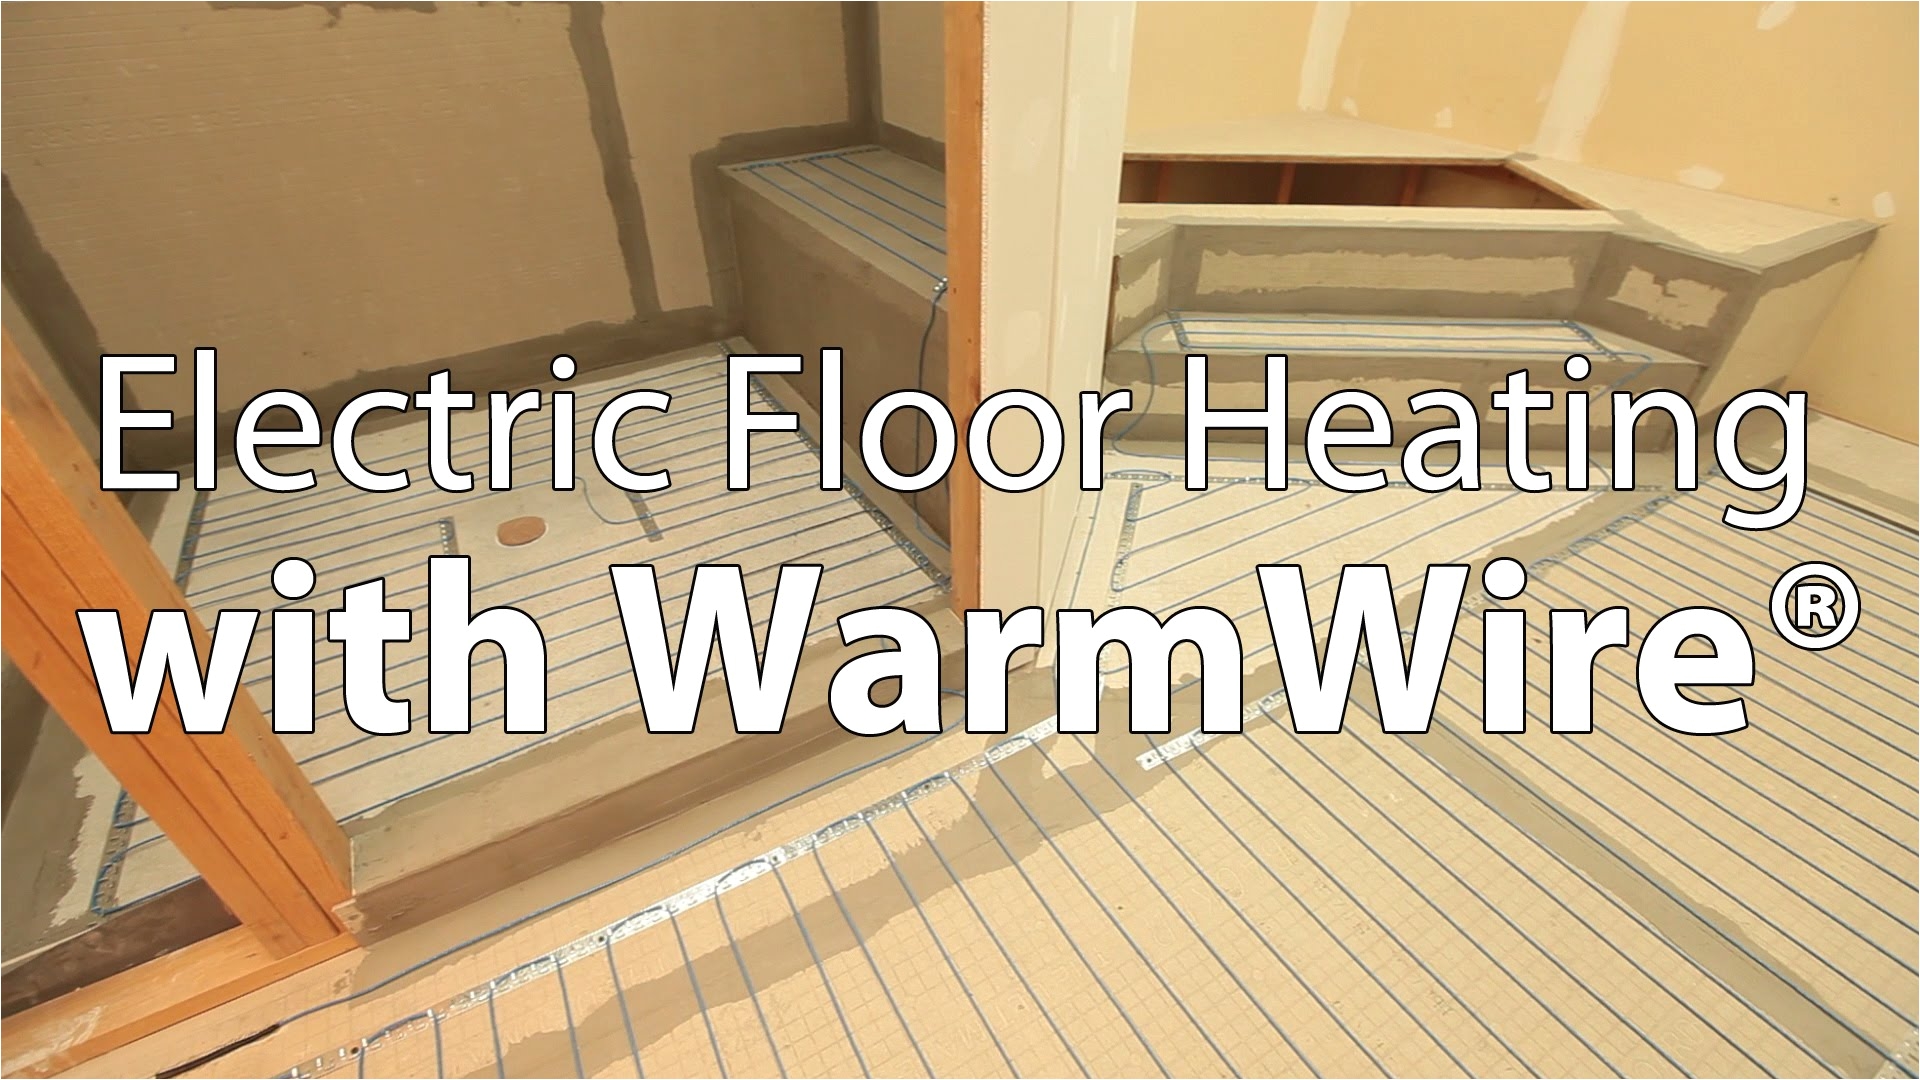 Suntouch Heated Floor Electric Floor Heating with Suntoucha Warmwirea Youtube